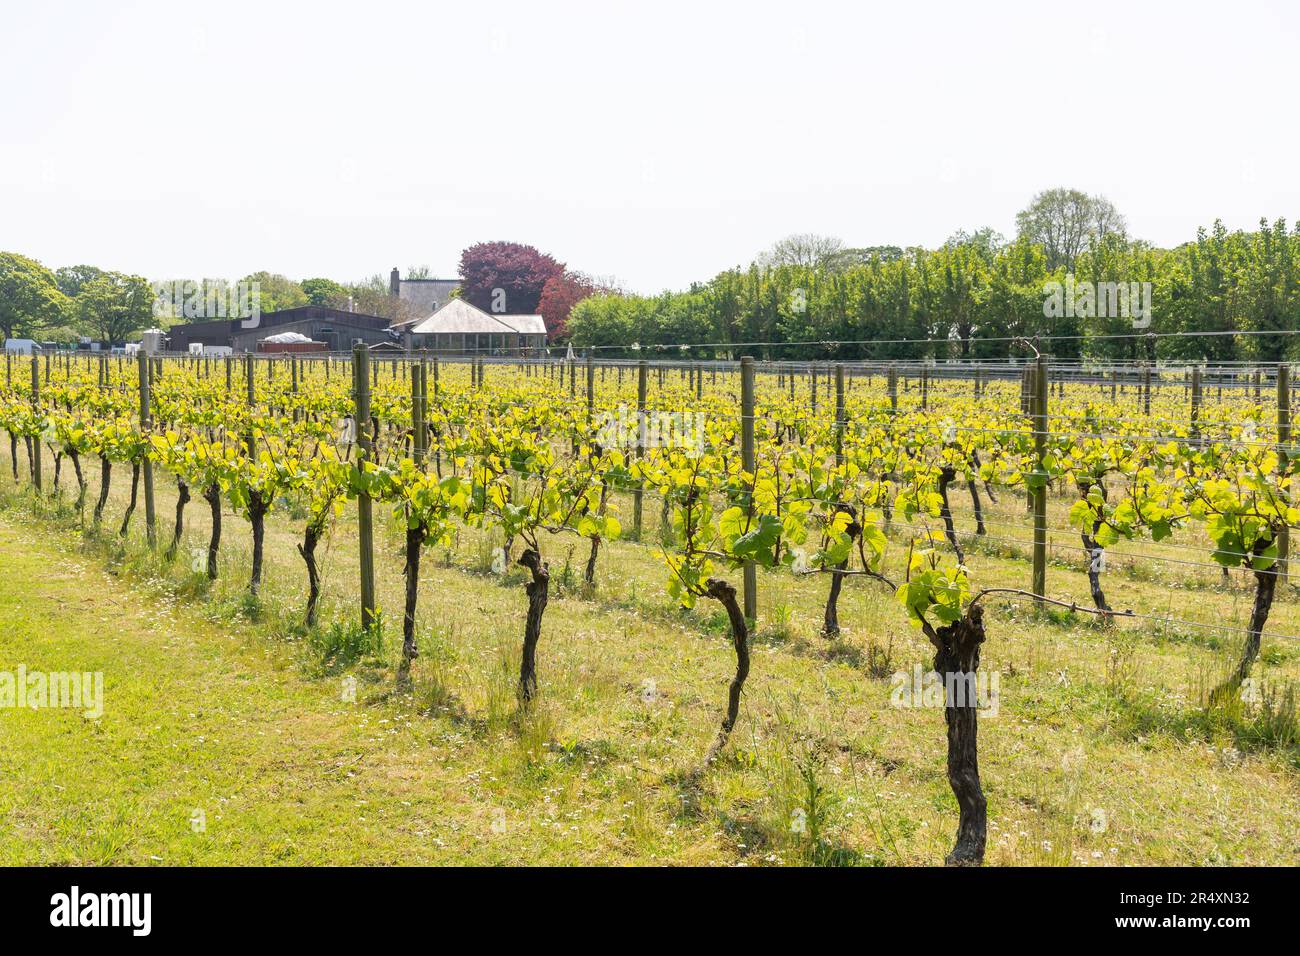 Rows of vines, La Mare Wine Estate, La Rue de la Hougue Mauger, St Mary Parish, Jersey Stock Photo